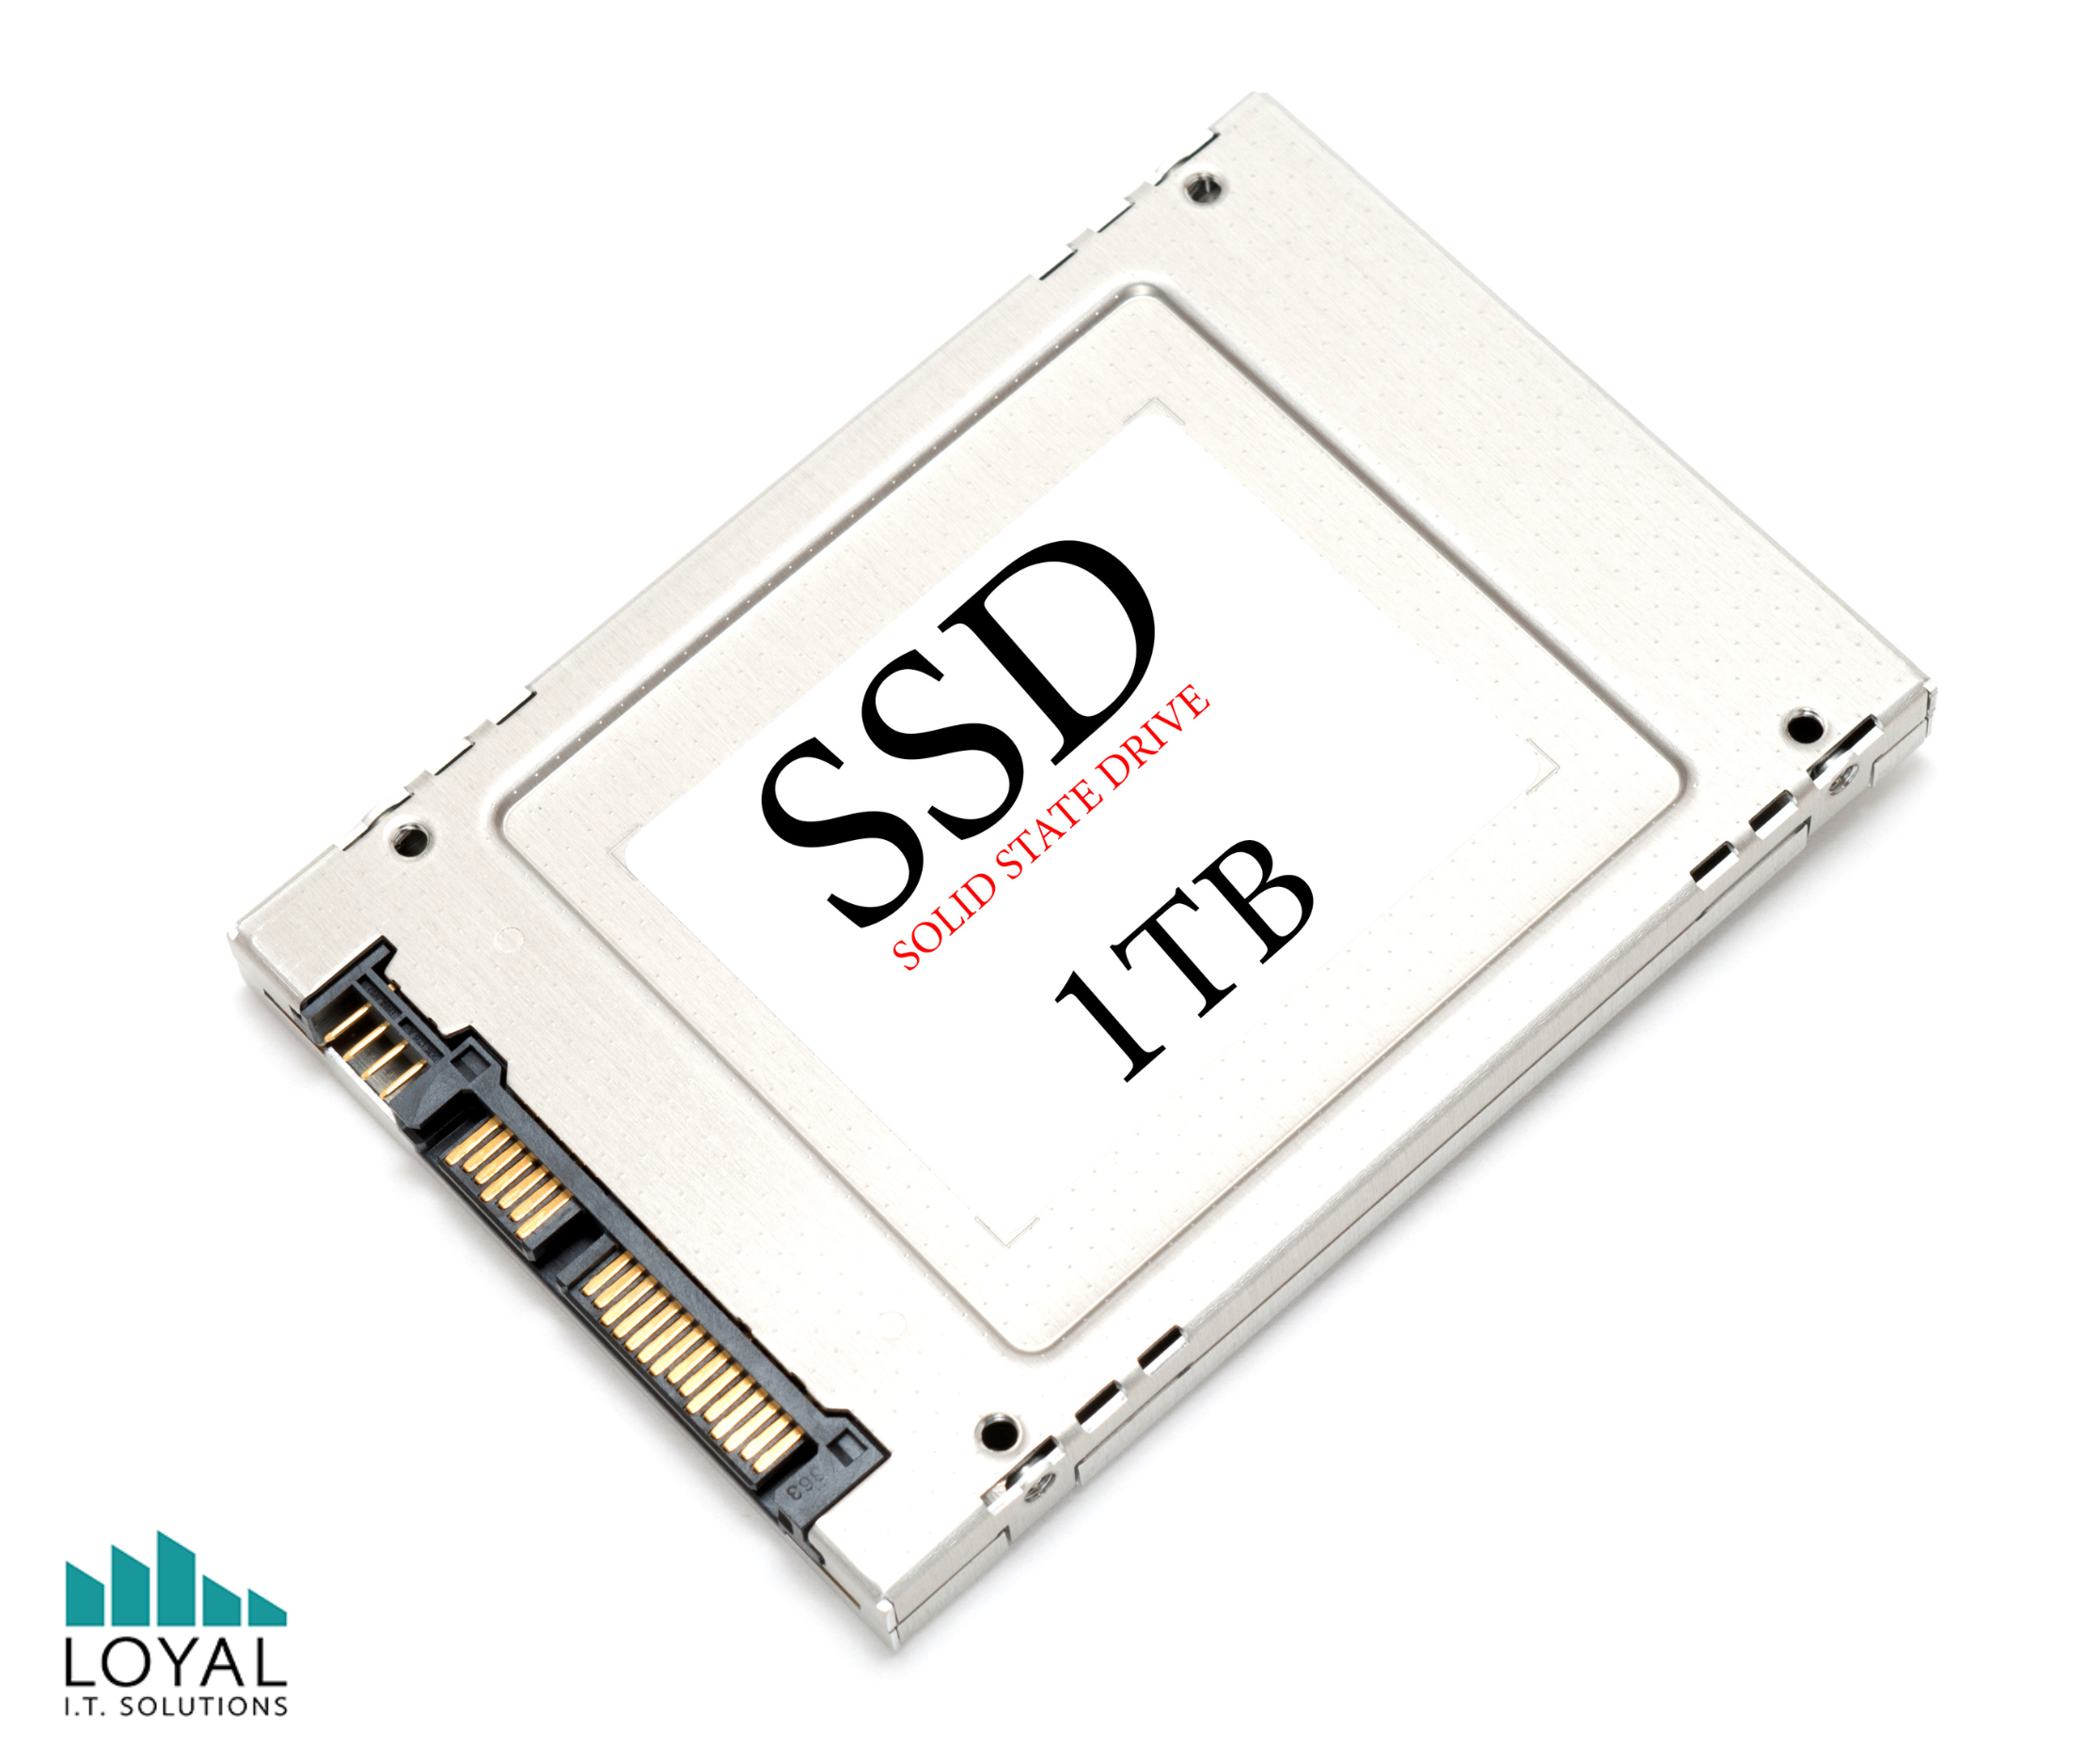 Understanding SSDs